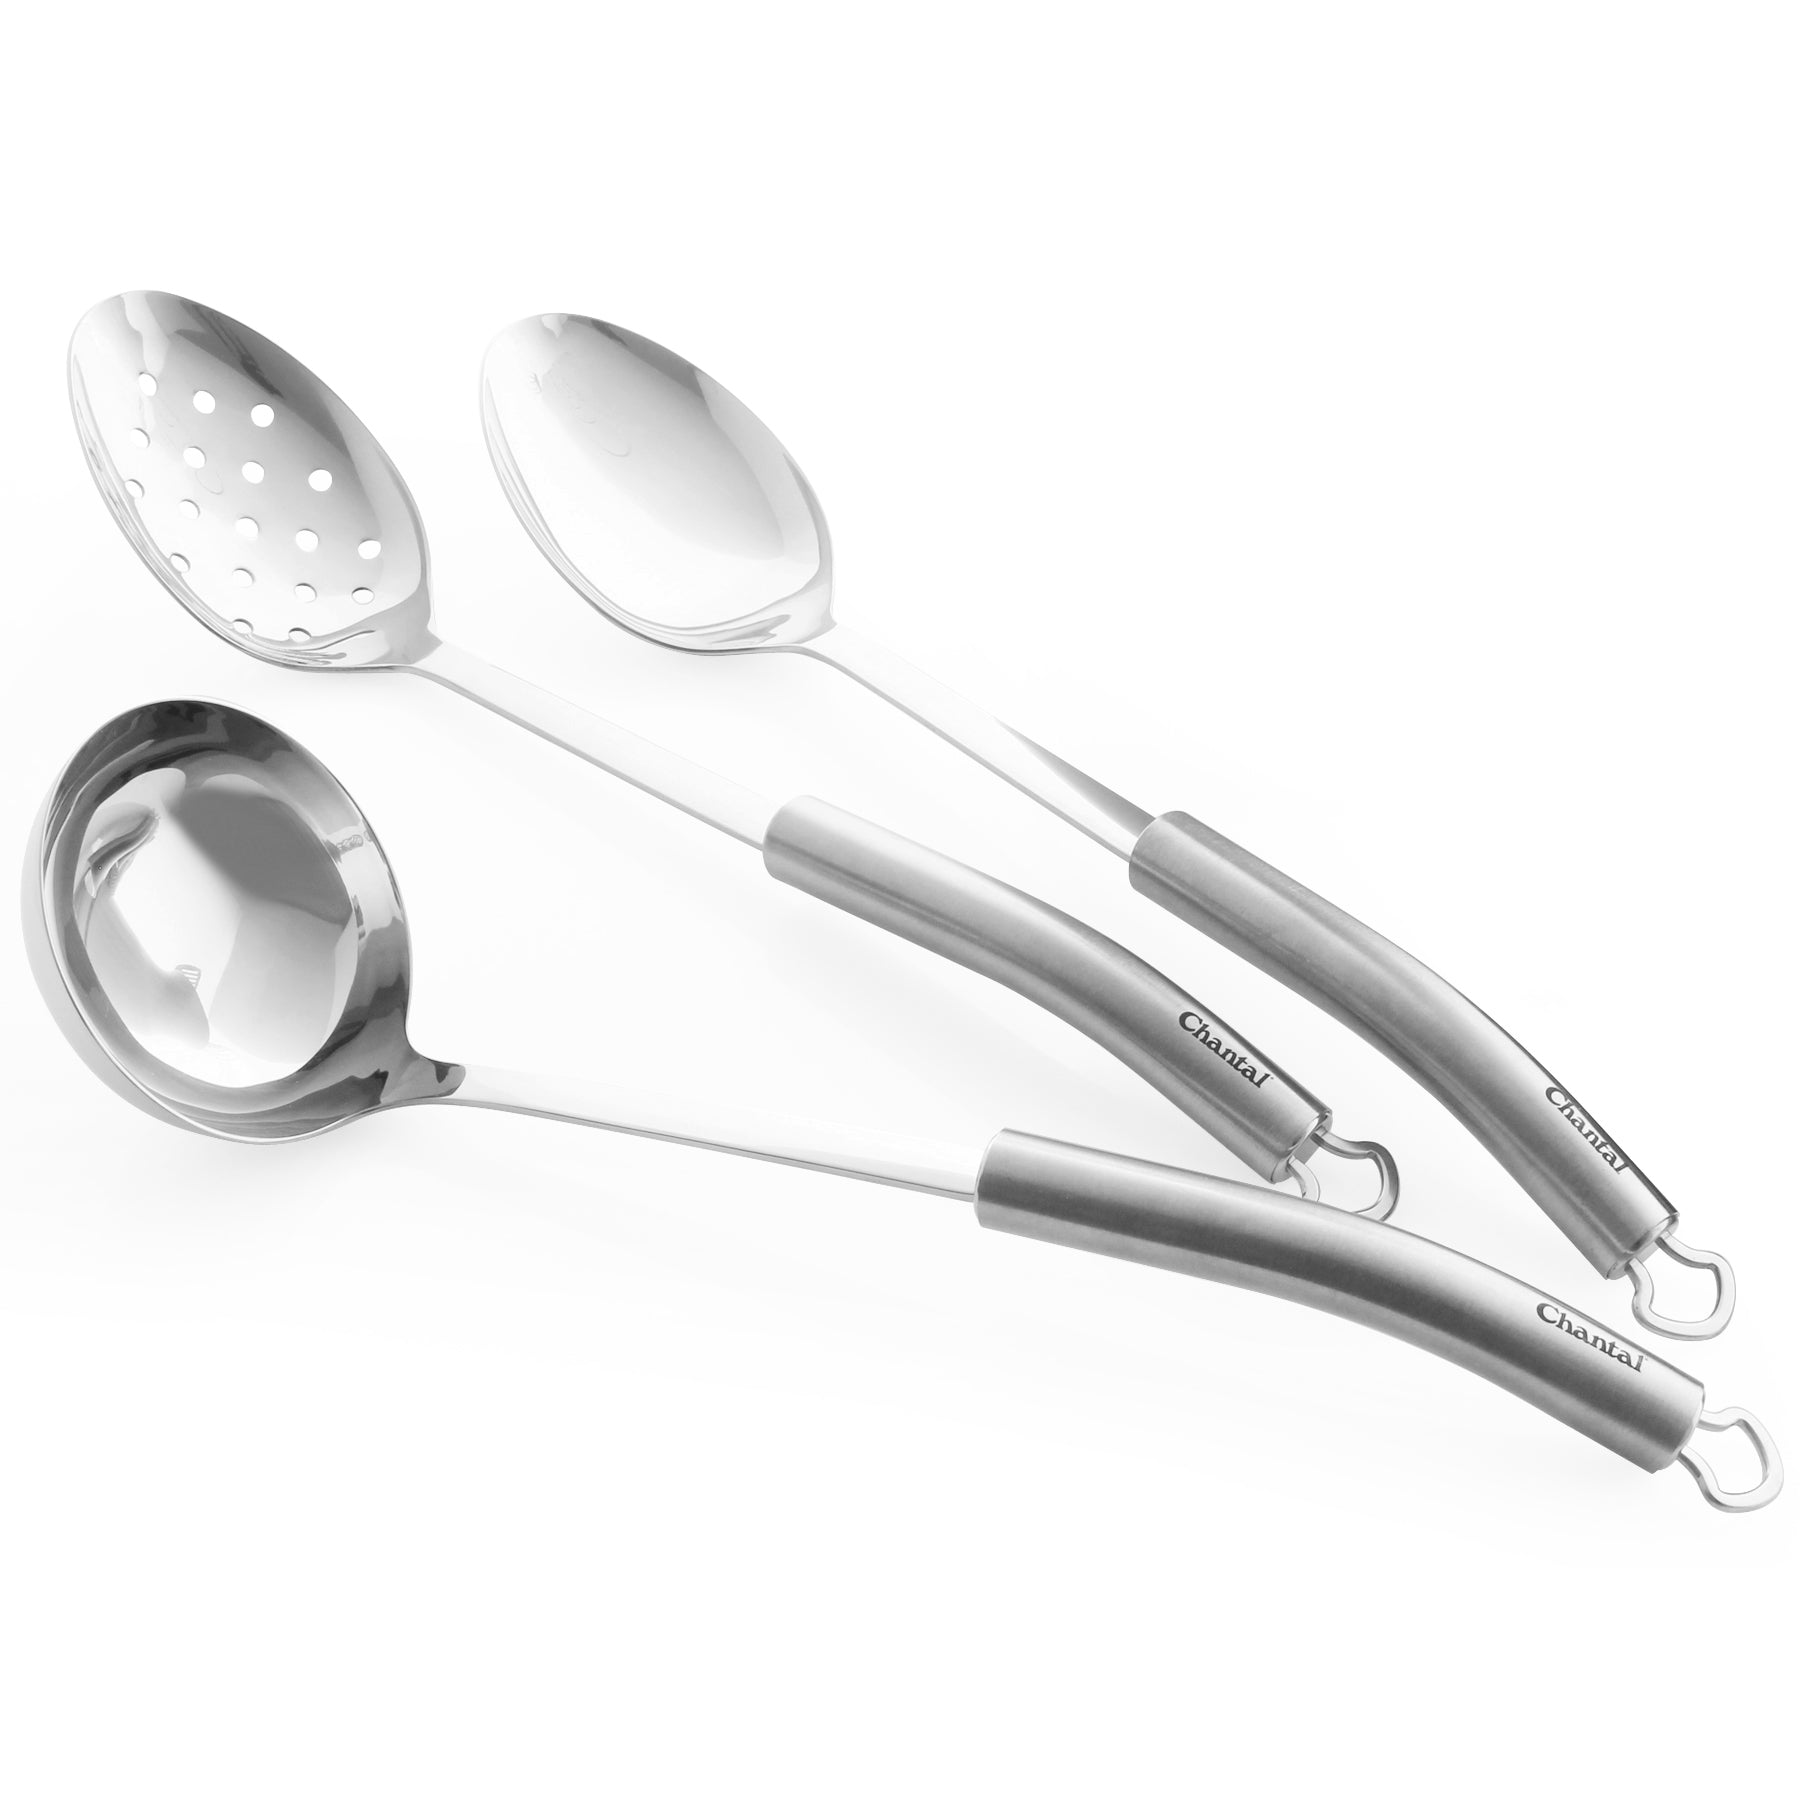 Spoon Set (3 Pc.)